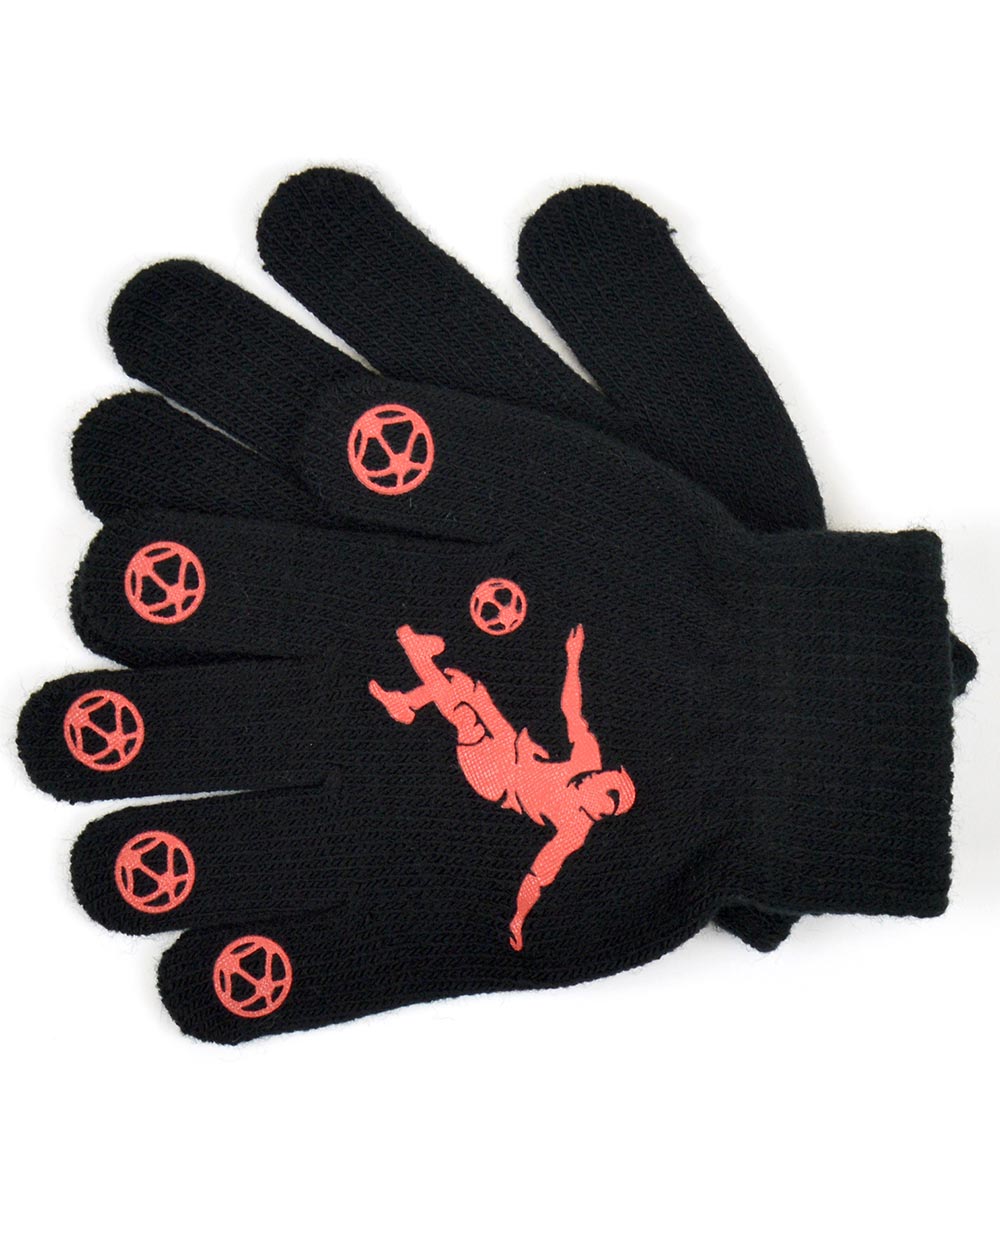 boys magic gripper gloves black stretchy football